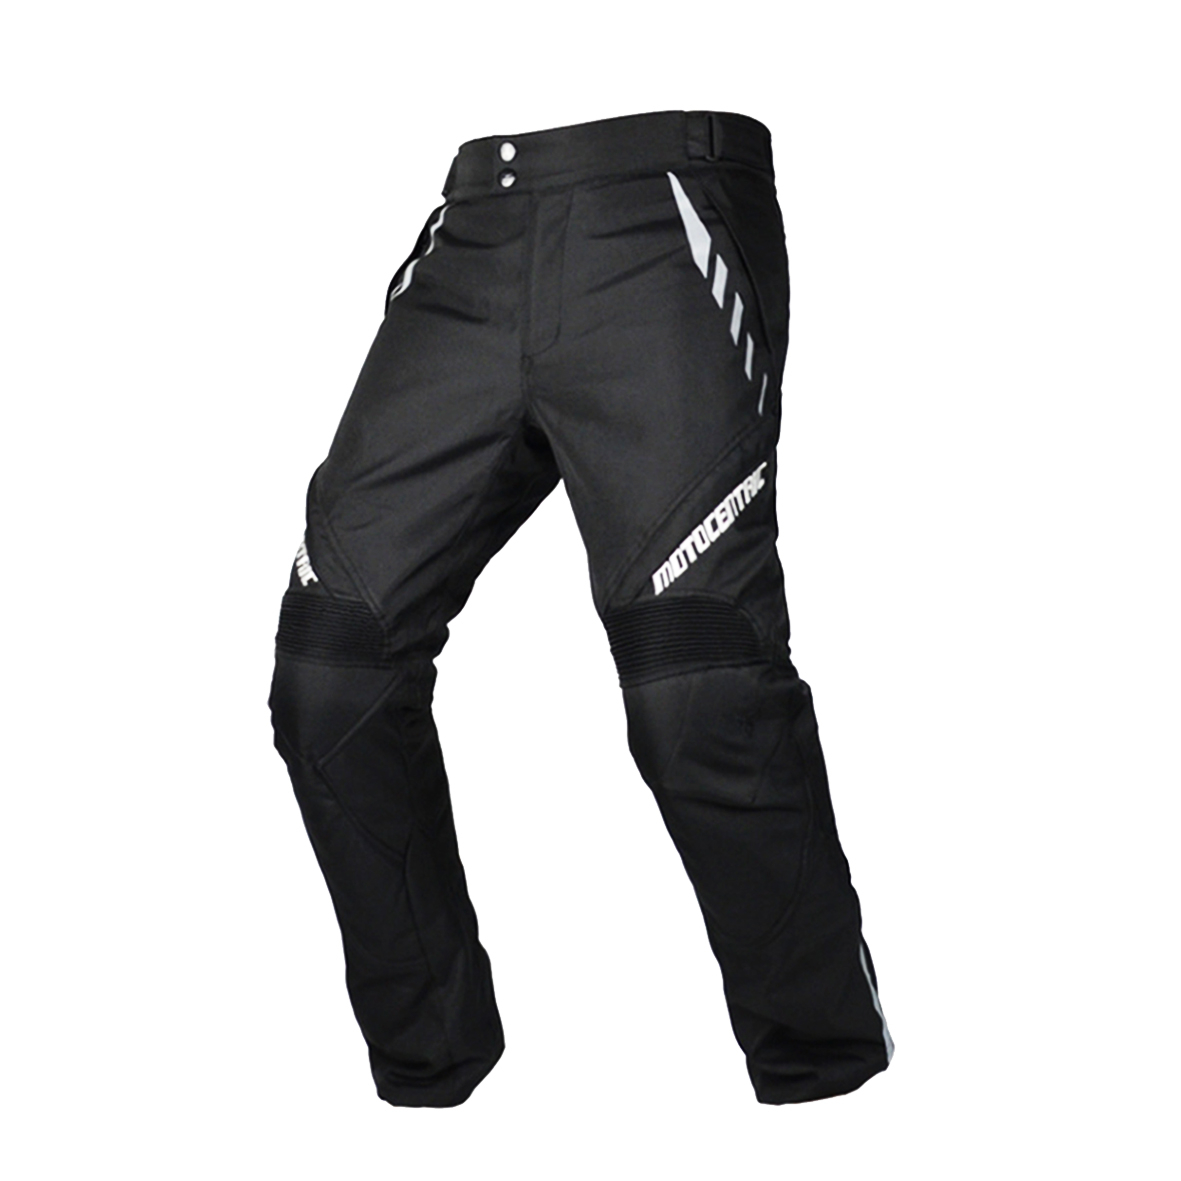 【KT BIKER】 (預購) 新款 防摔褲 Moto Centric 騎士裝備 防摔 重機 保暖加厚 〔MCJ004〕